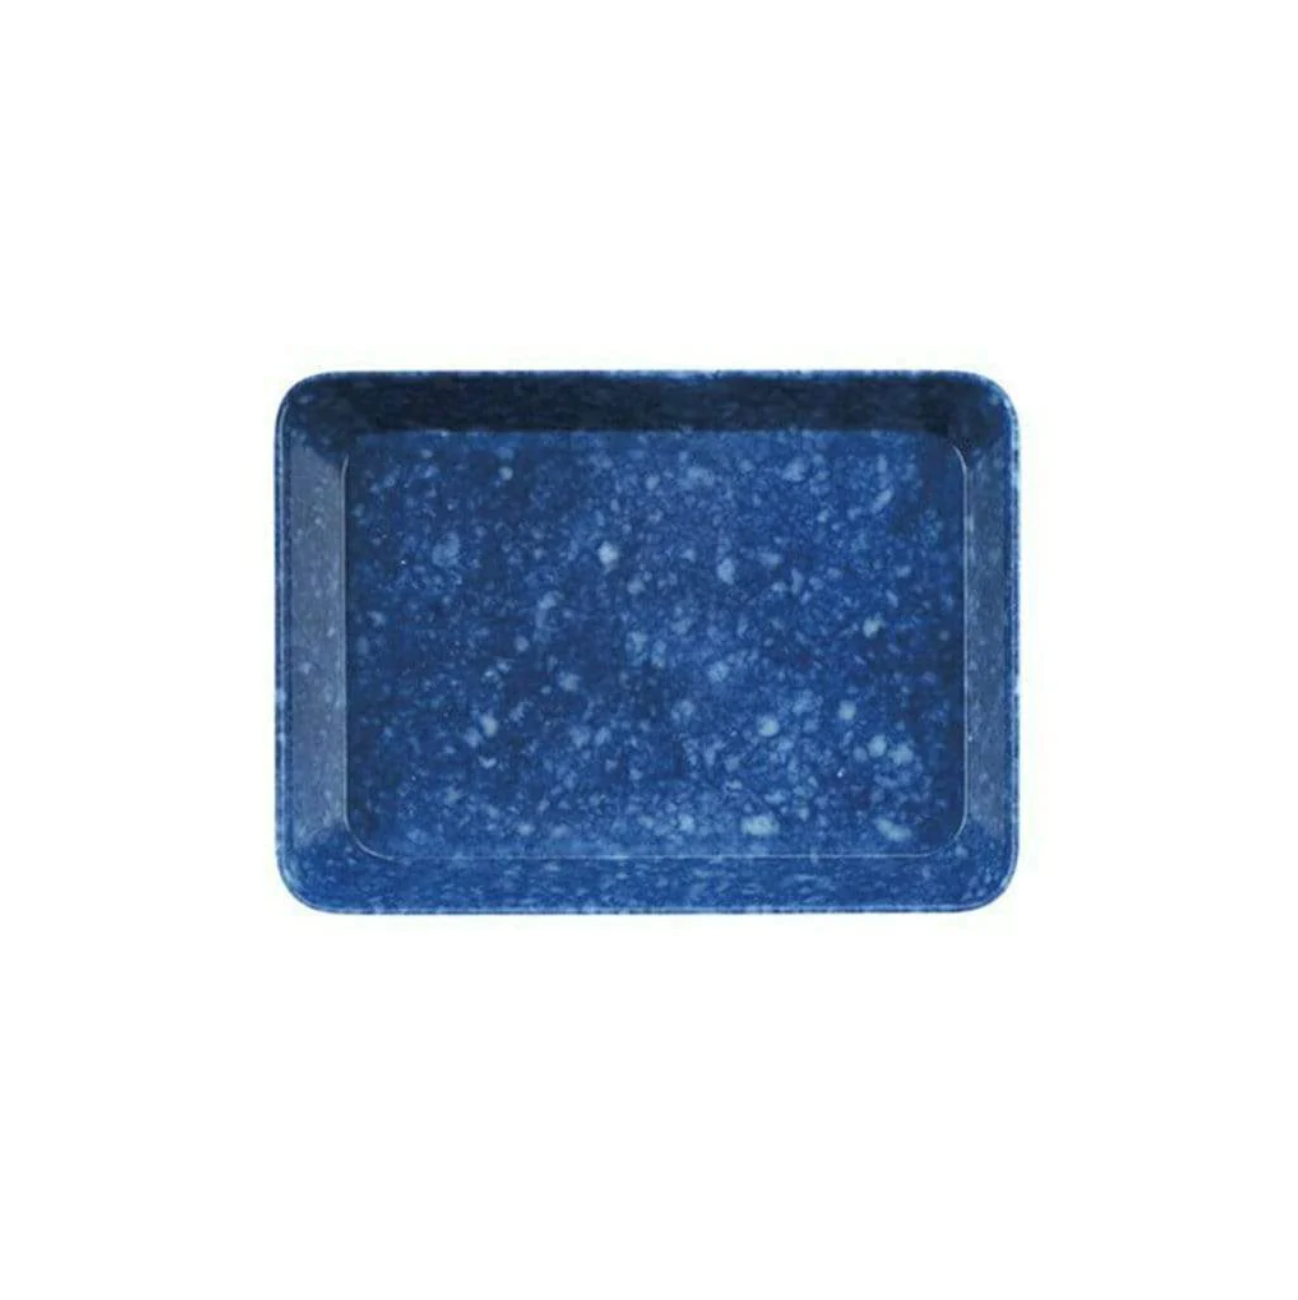 Hightide Melamine Marbled Tablett S blau